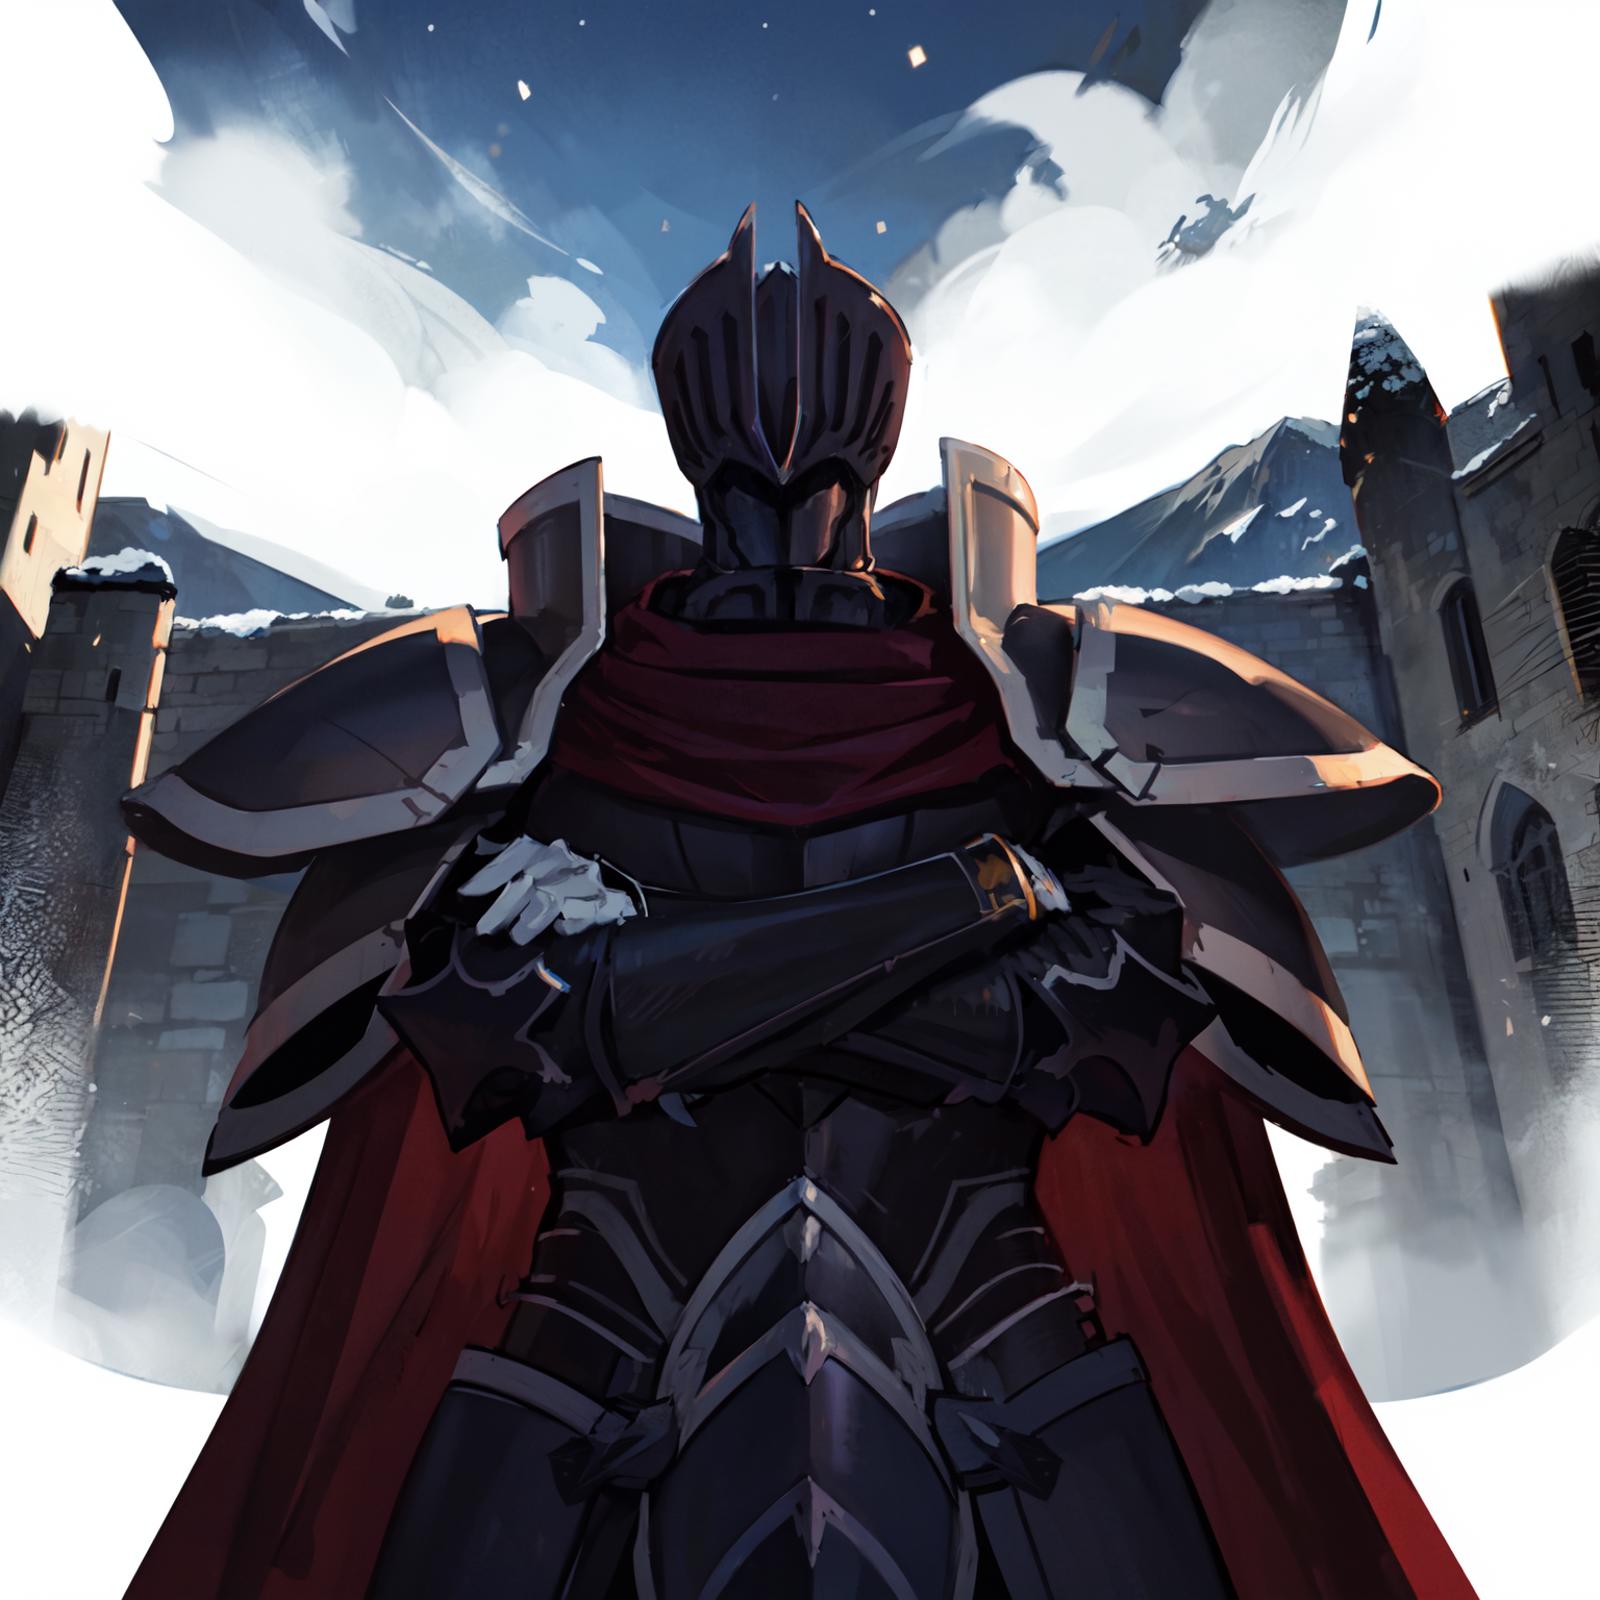 The Black Knight - Fire Emblem image by Maxx_